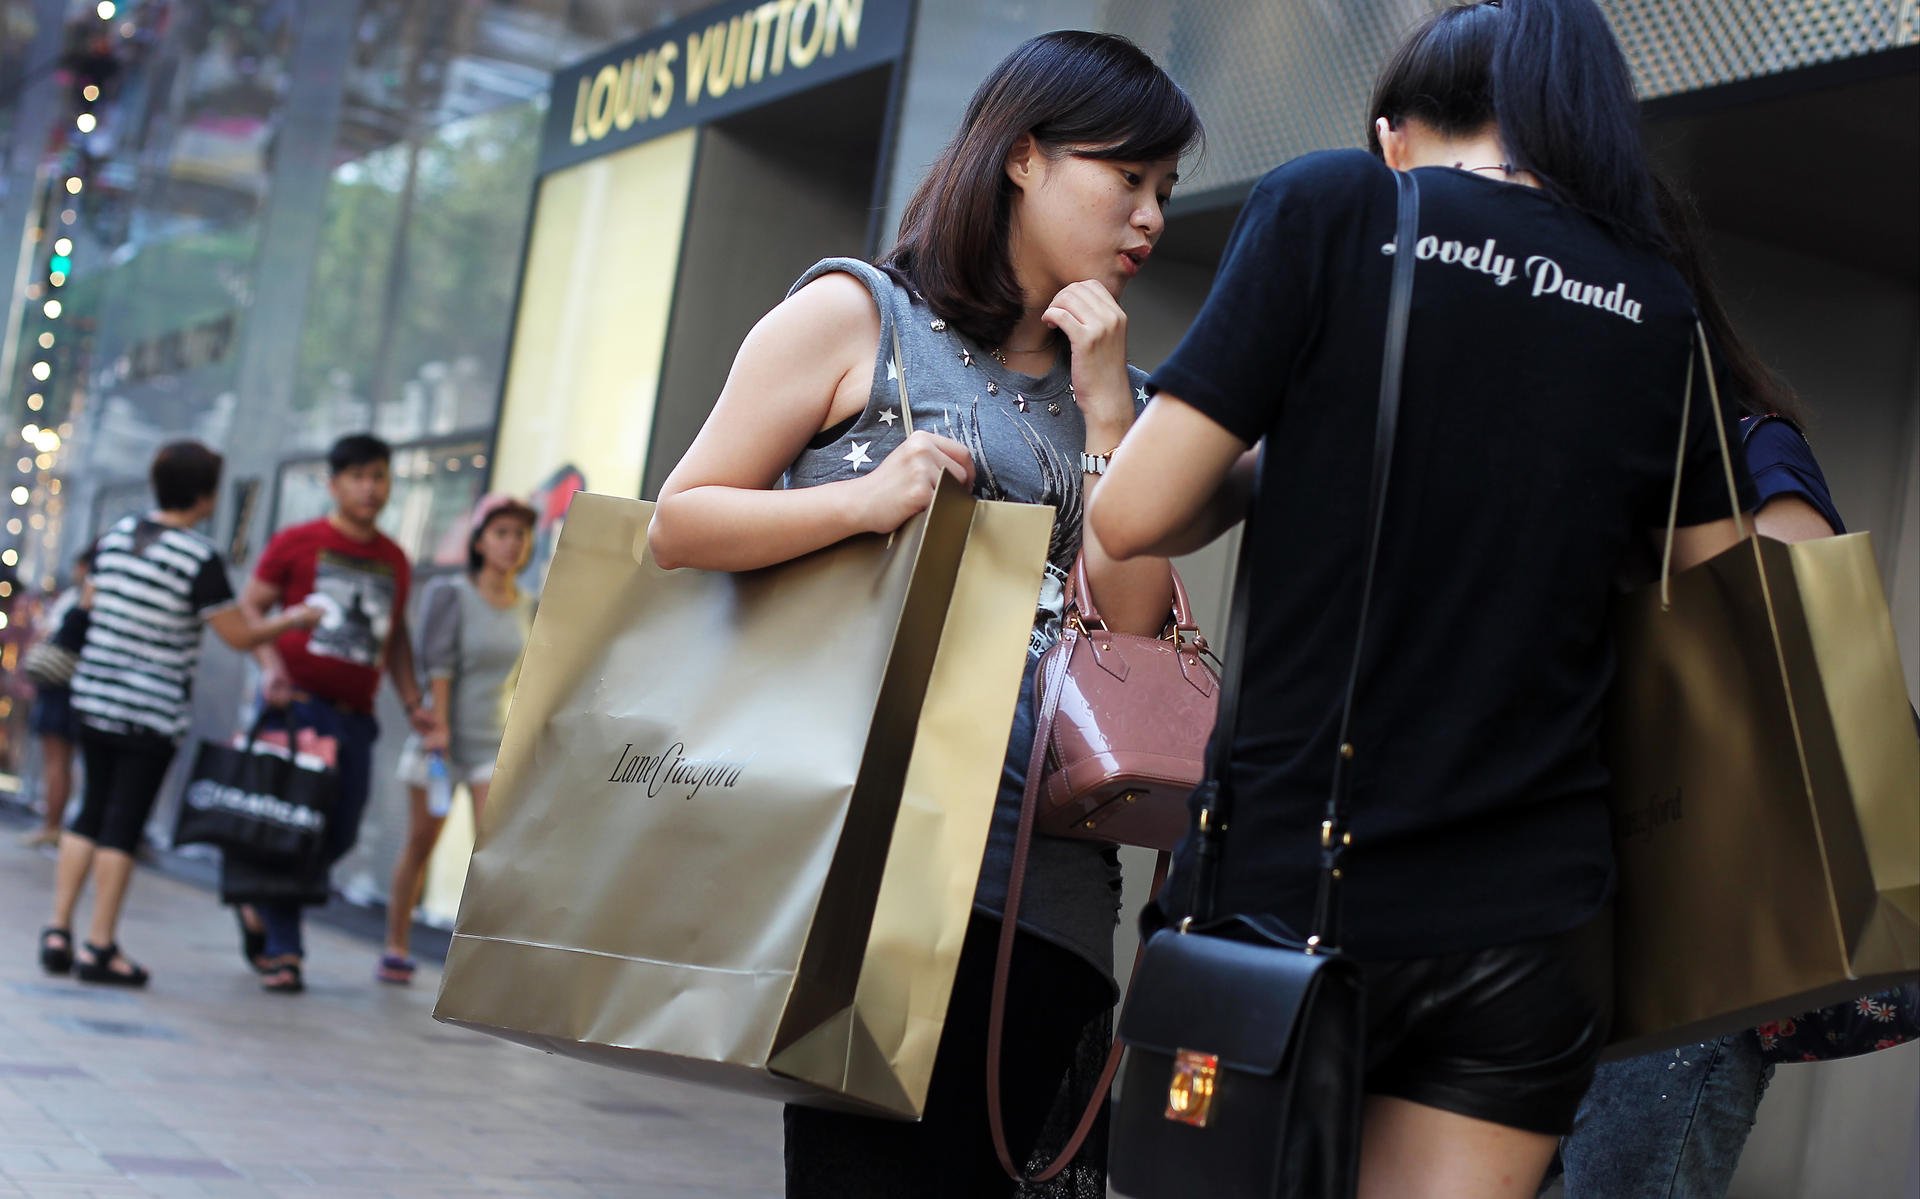 Beijing's devaluation of the yuan has cut sharply into Hong Kong's retail sector. Photo: Sam Tsang